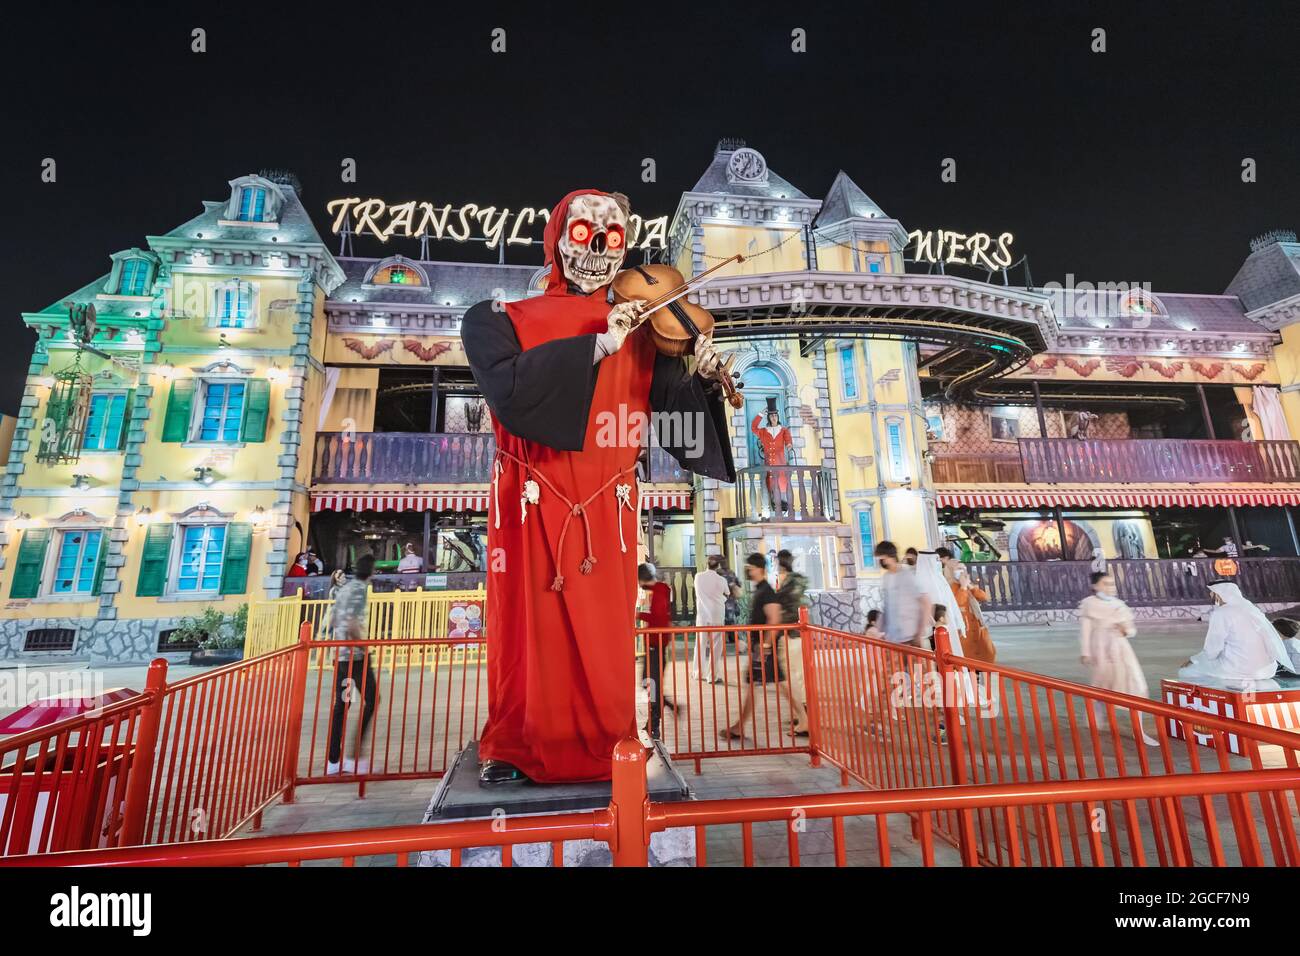 26 February 2021, UAE, Dubai: House of fear in the style of Dracula's Castle in Transylvania at the amusement park in Global Village Dubai Stock Photo